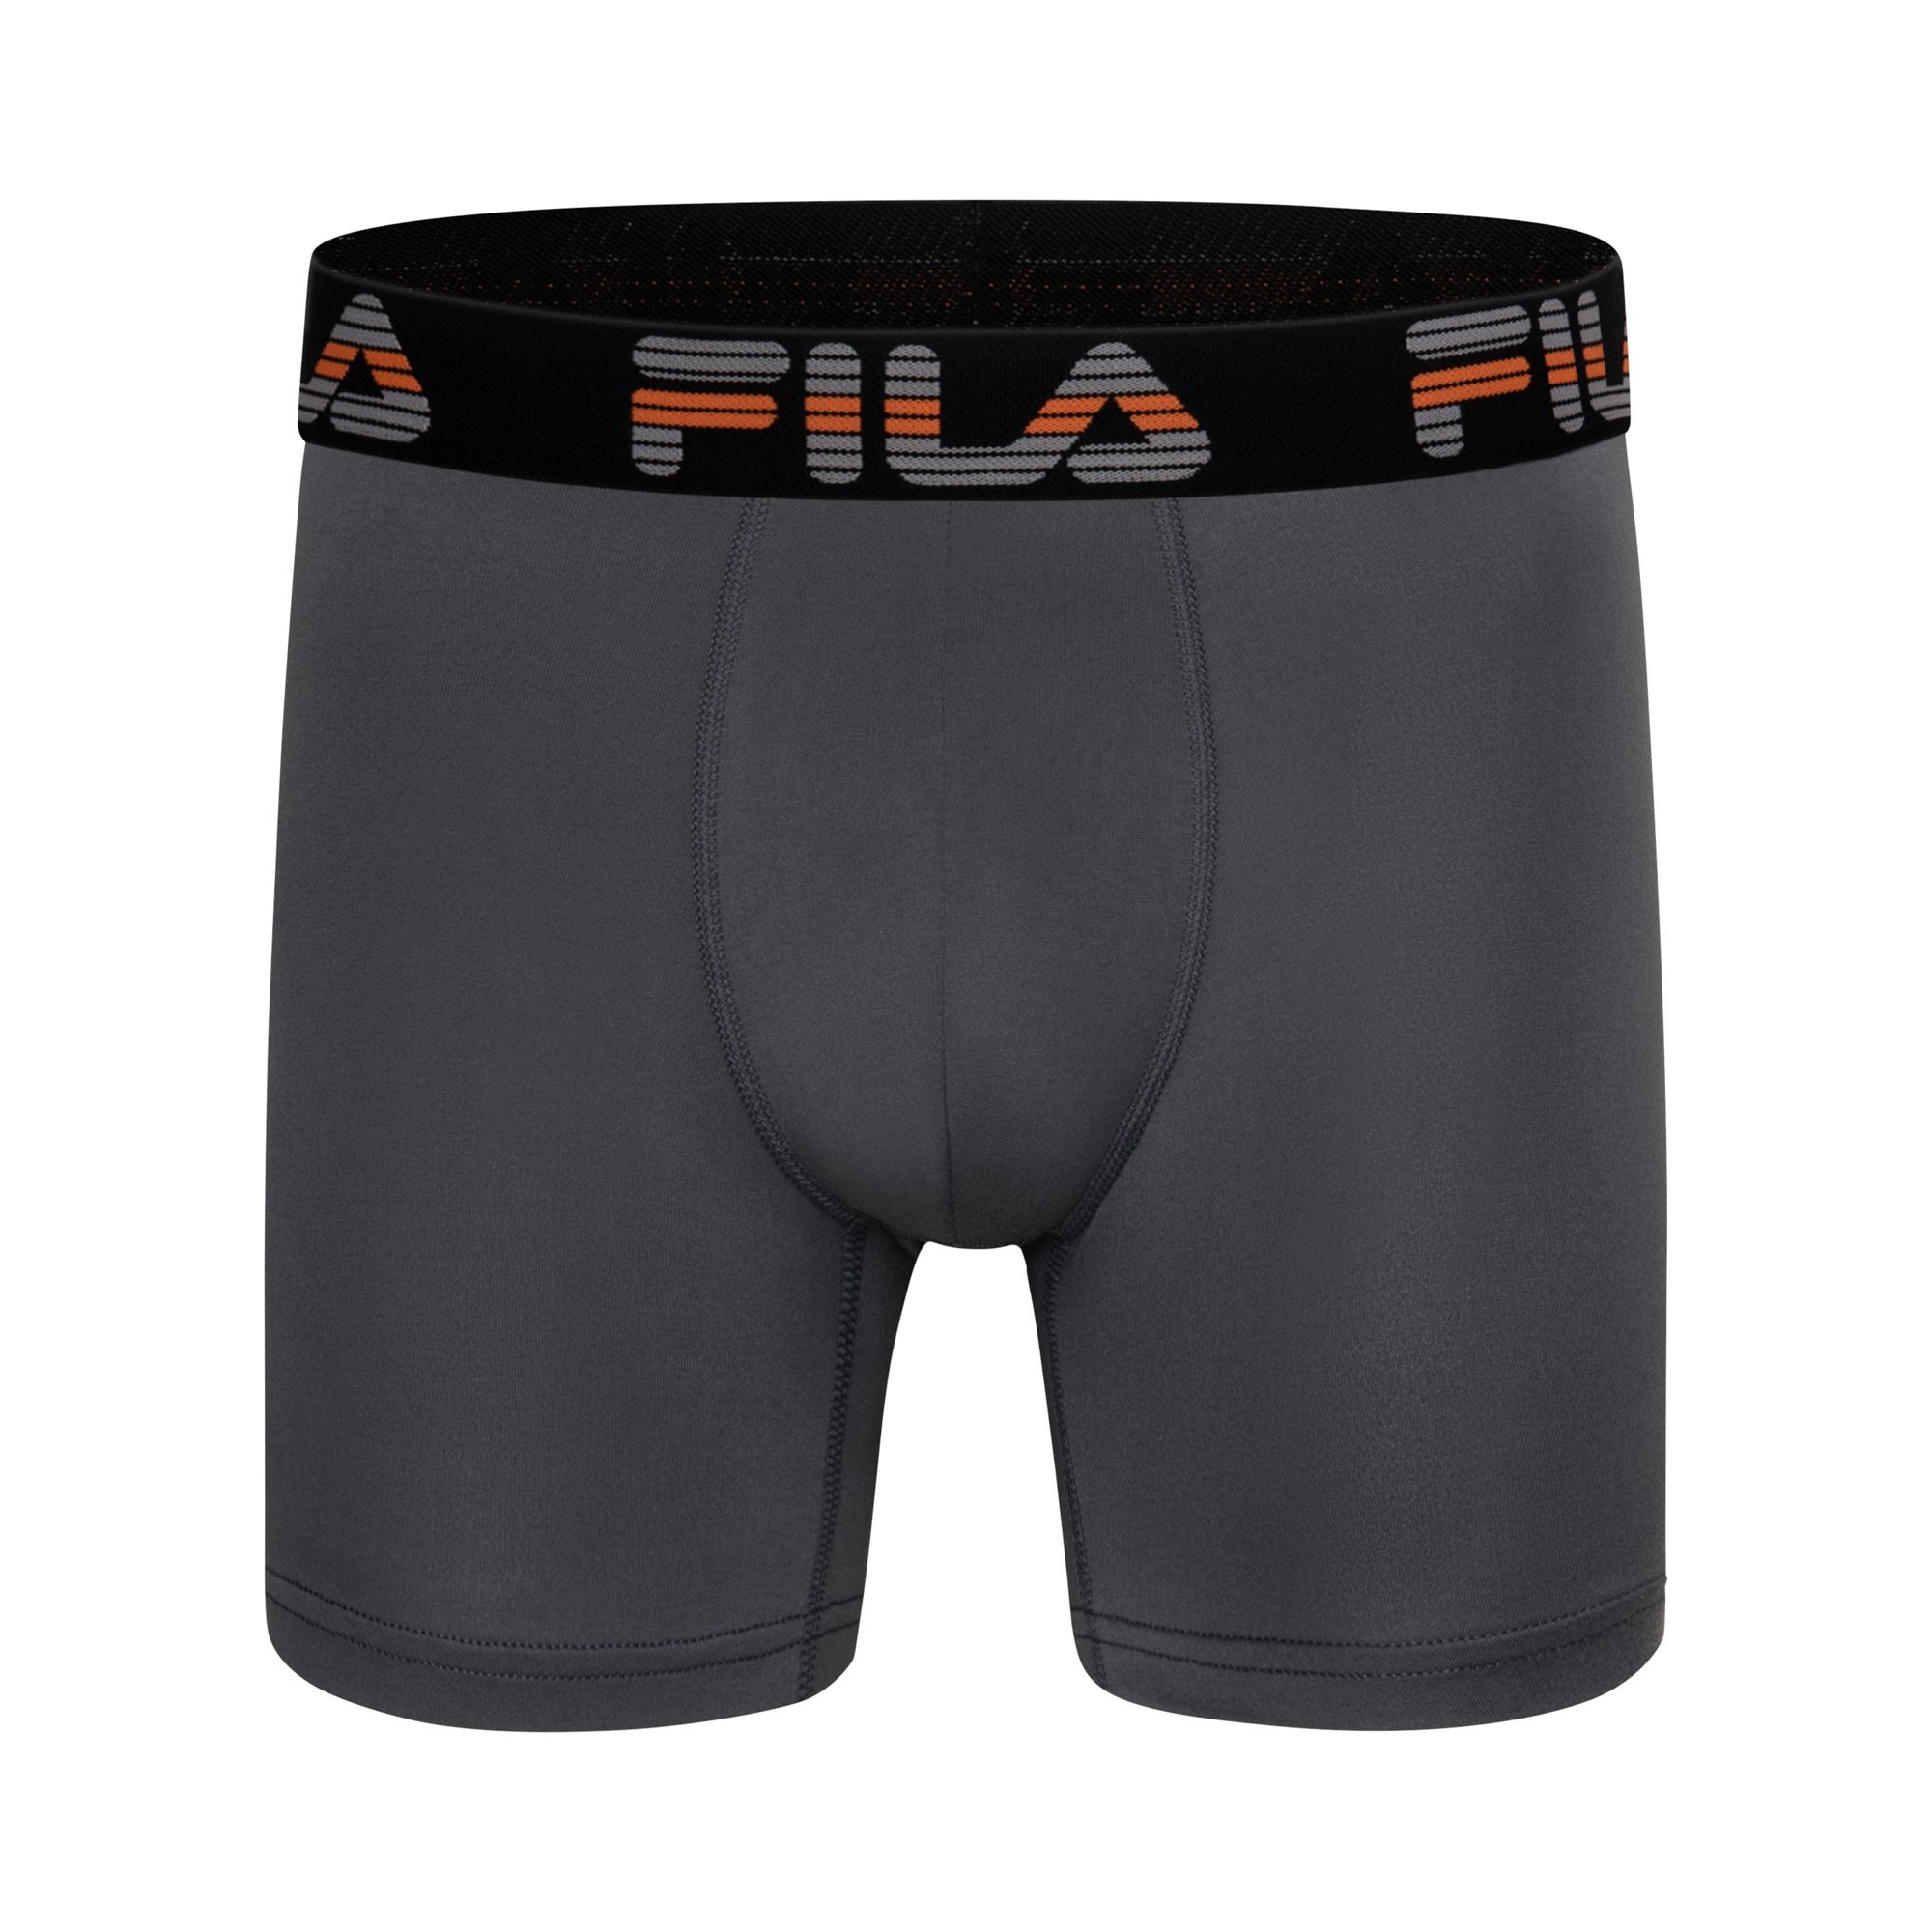 Fingerhut - Fila Men's 4-Pack Performance Microfiber No-Fly Boxer Briefs